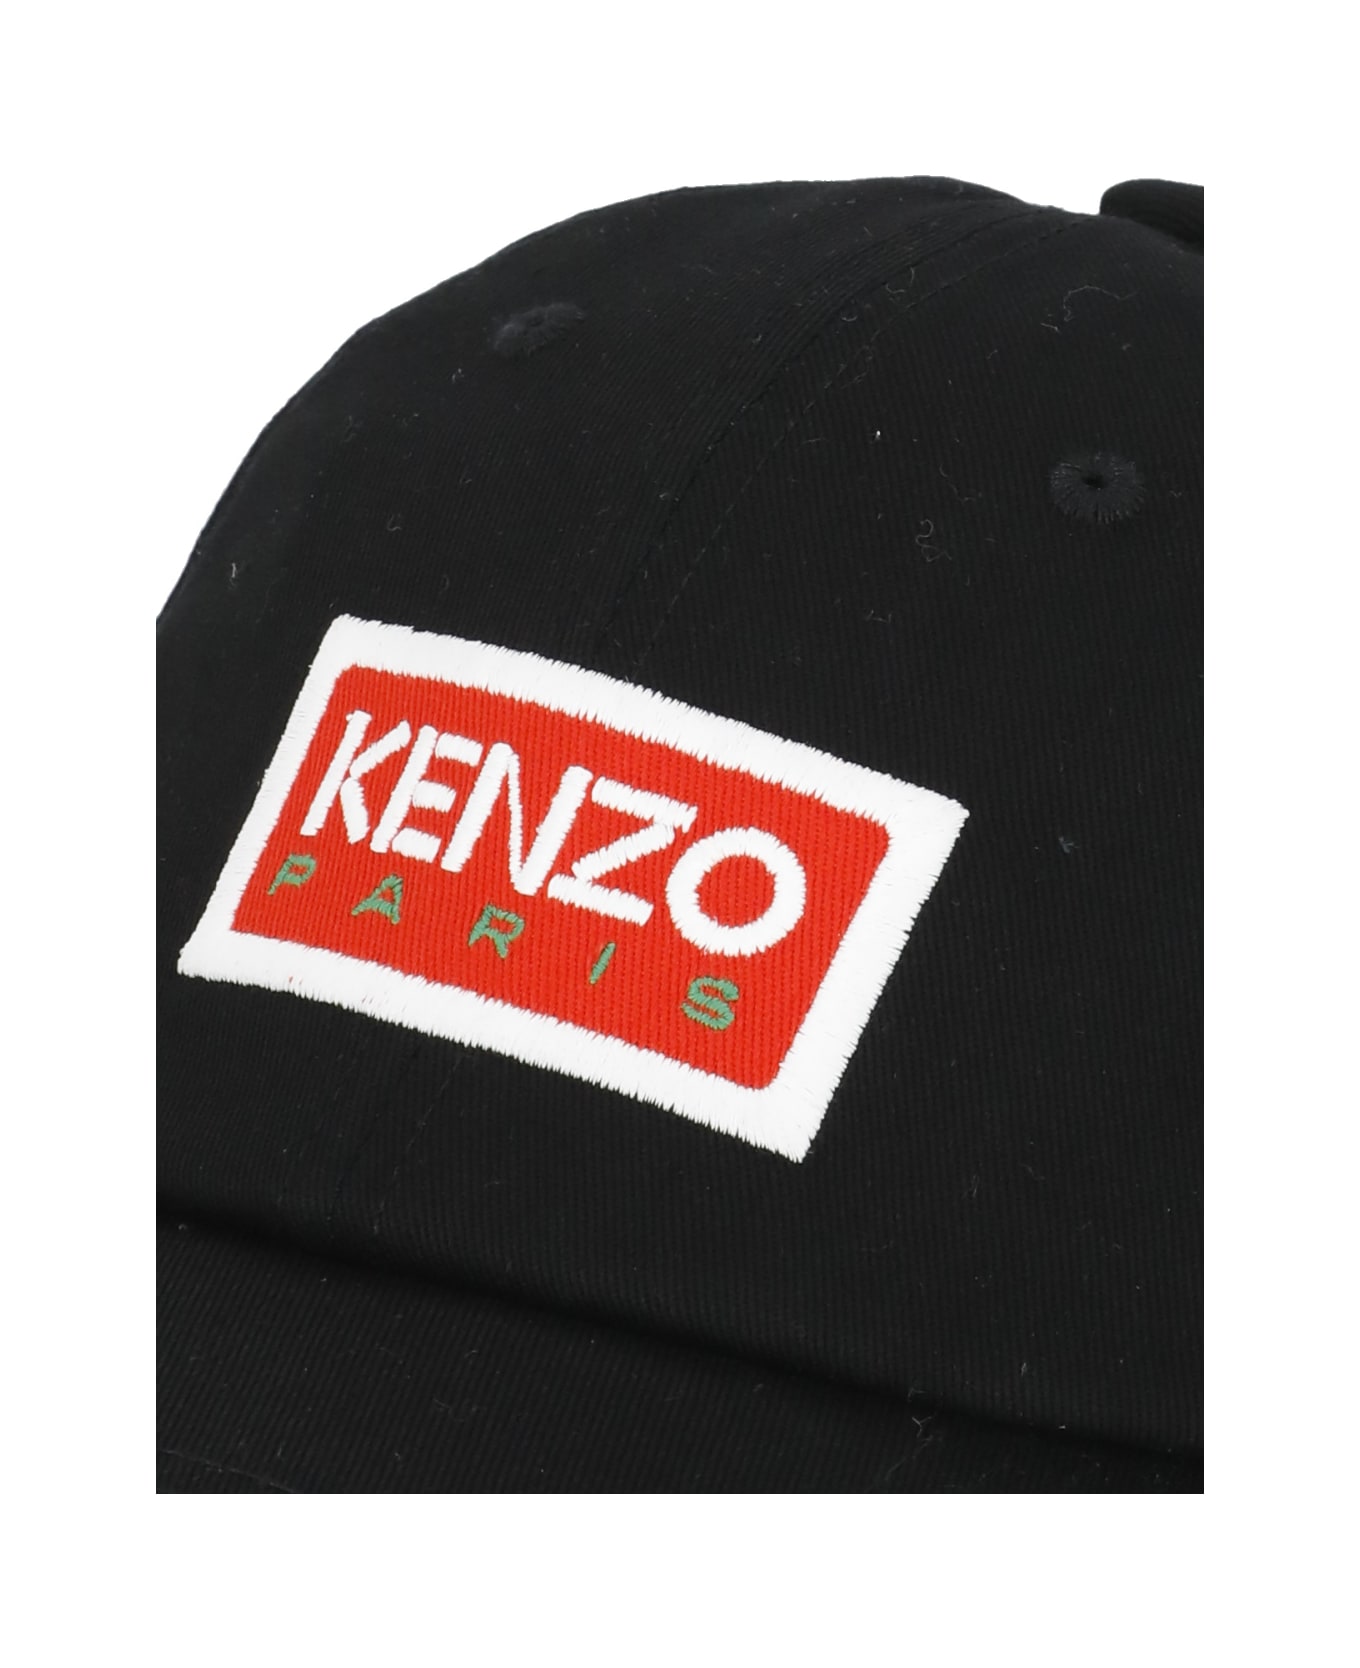 Kenzo Logo Baseball Cap - Black